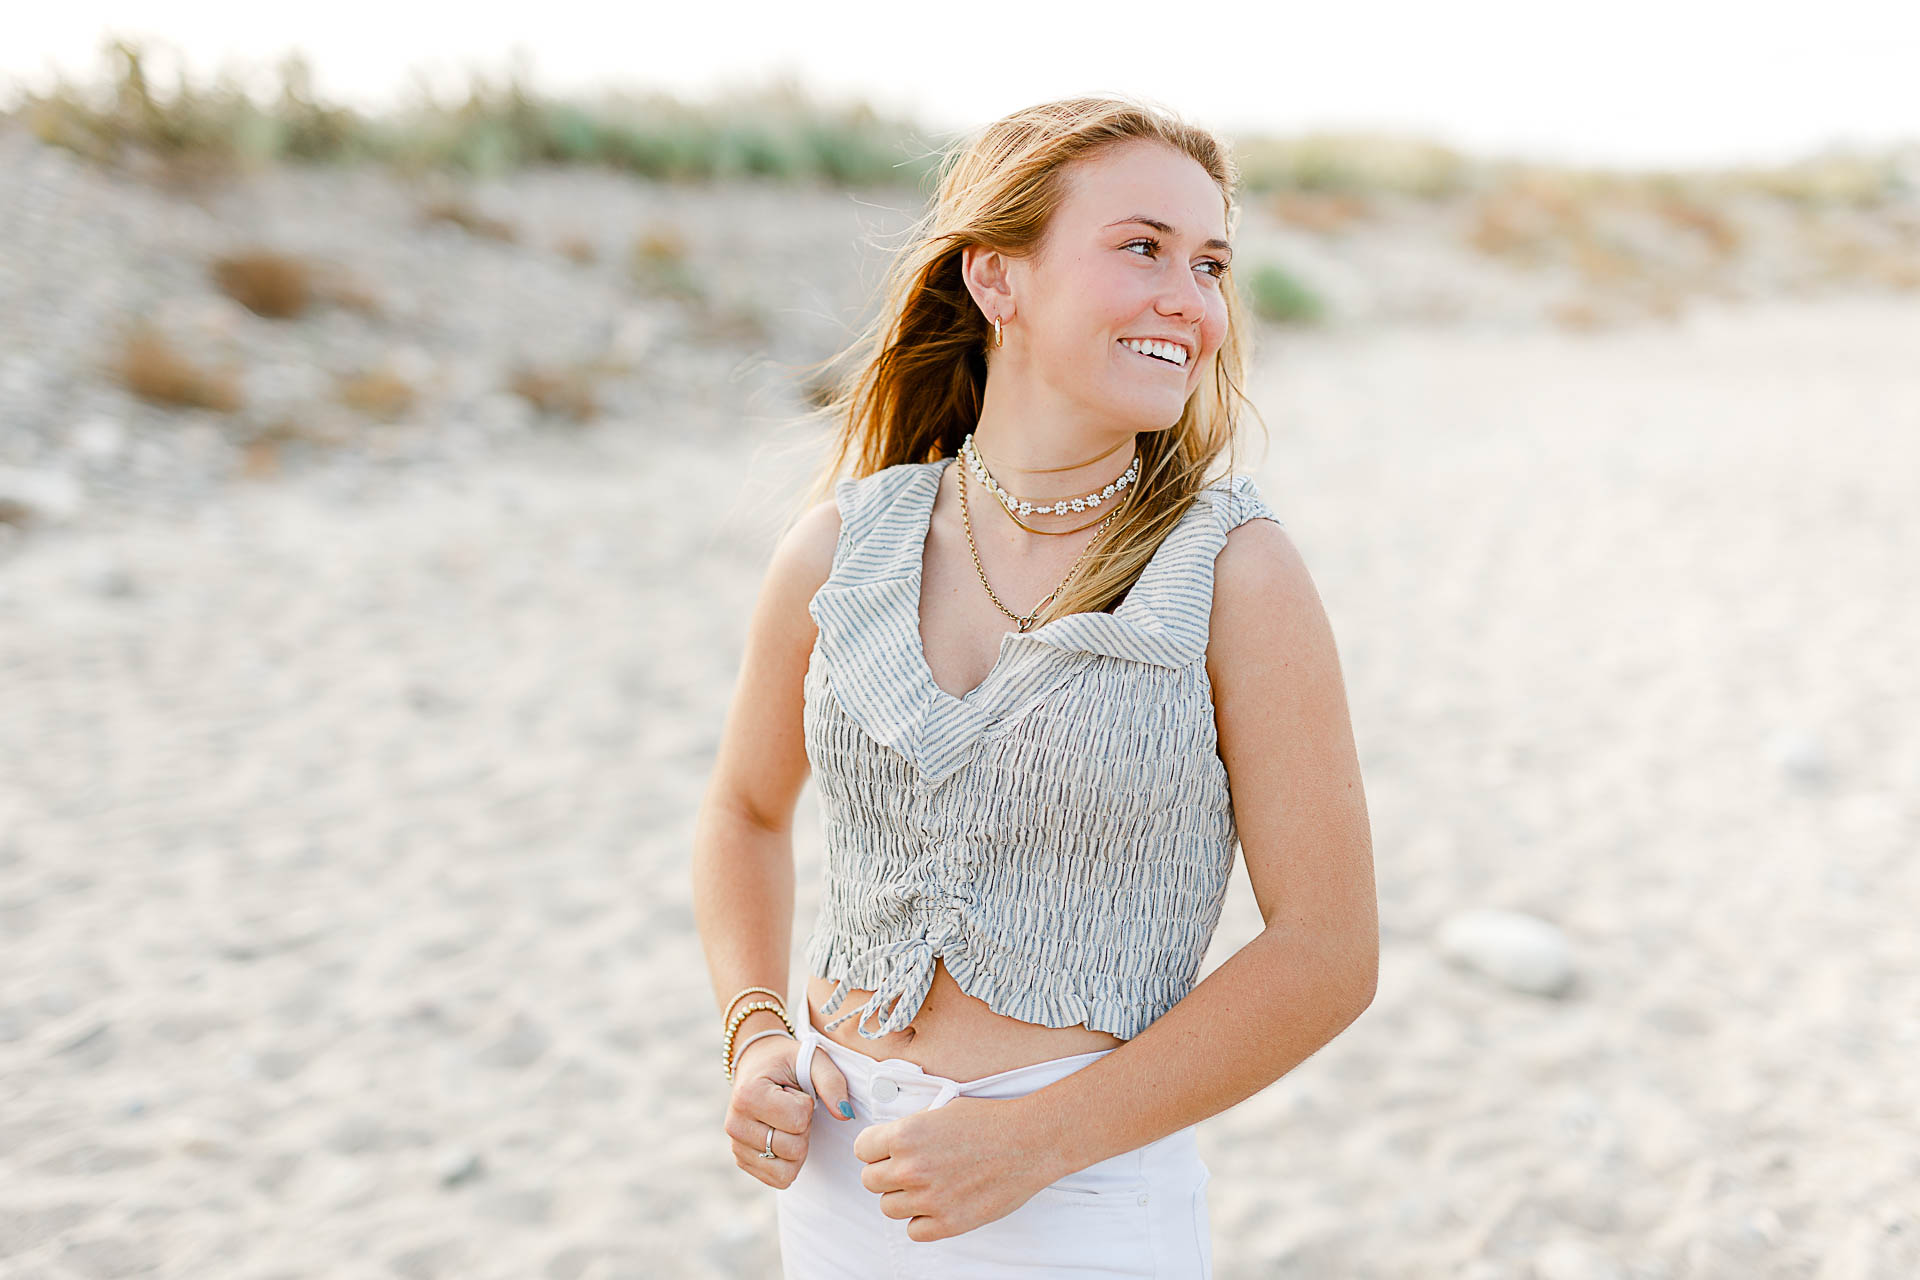 Photo by Scituate Senior Portrait Photographer Christina Runnals | High school senior girl laughing on the beach